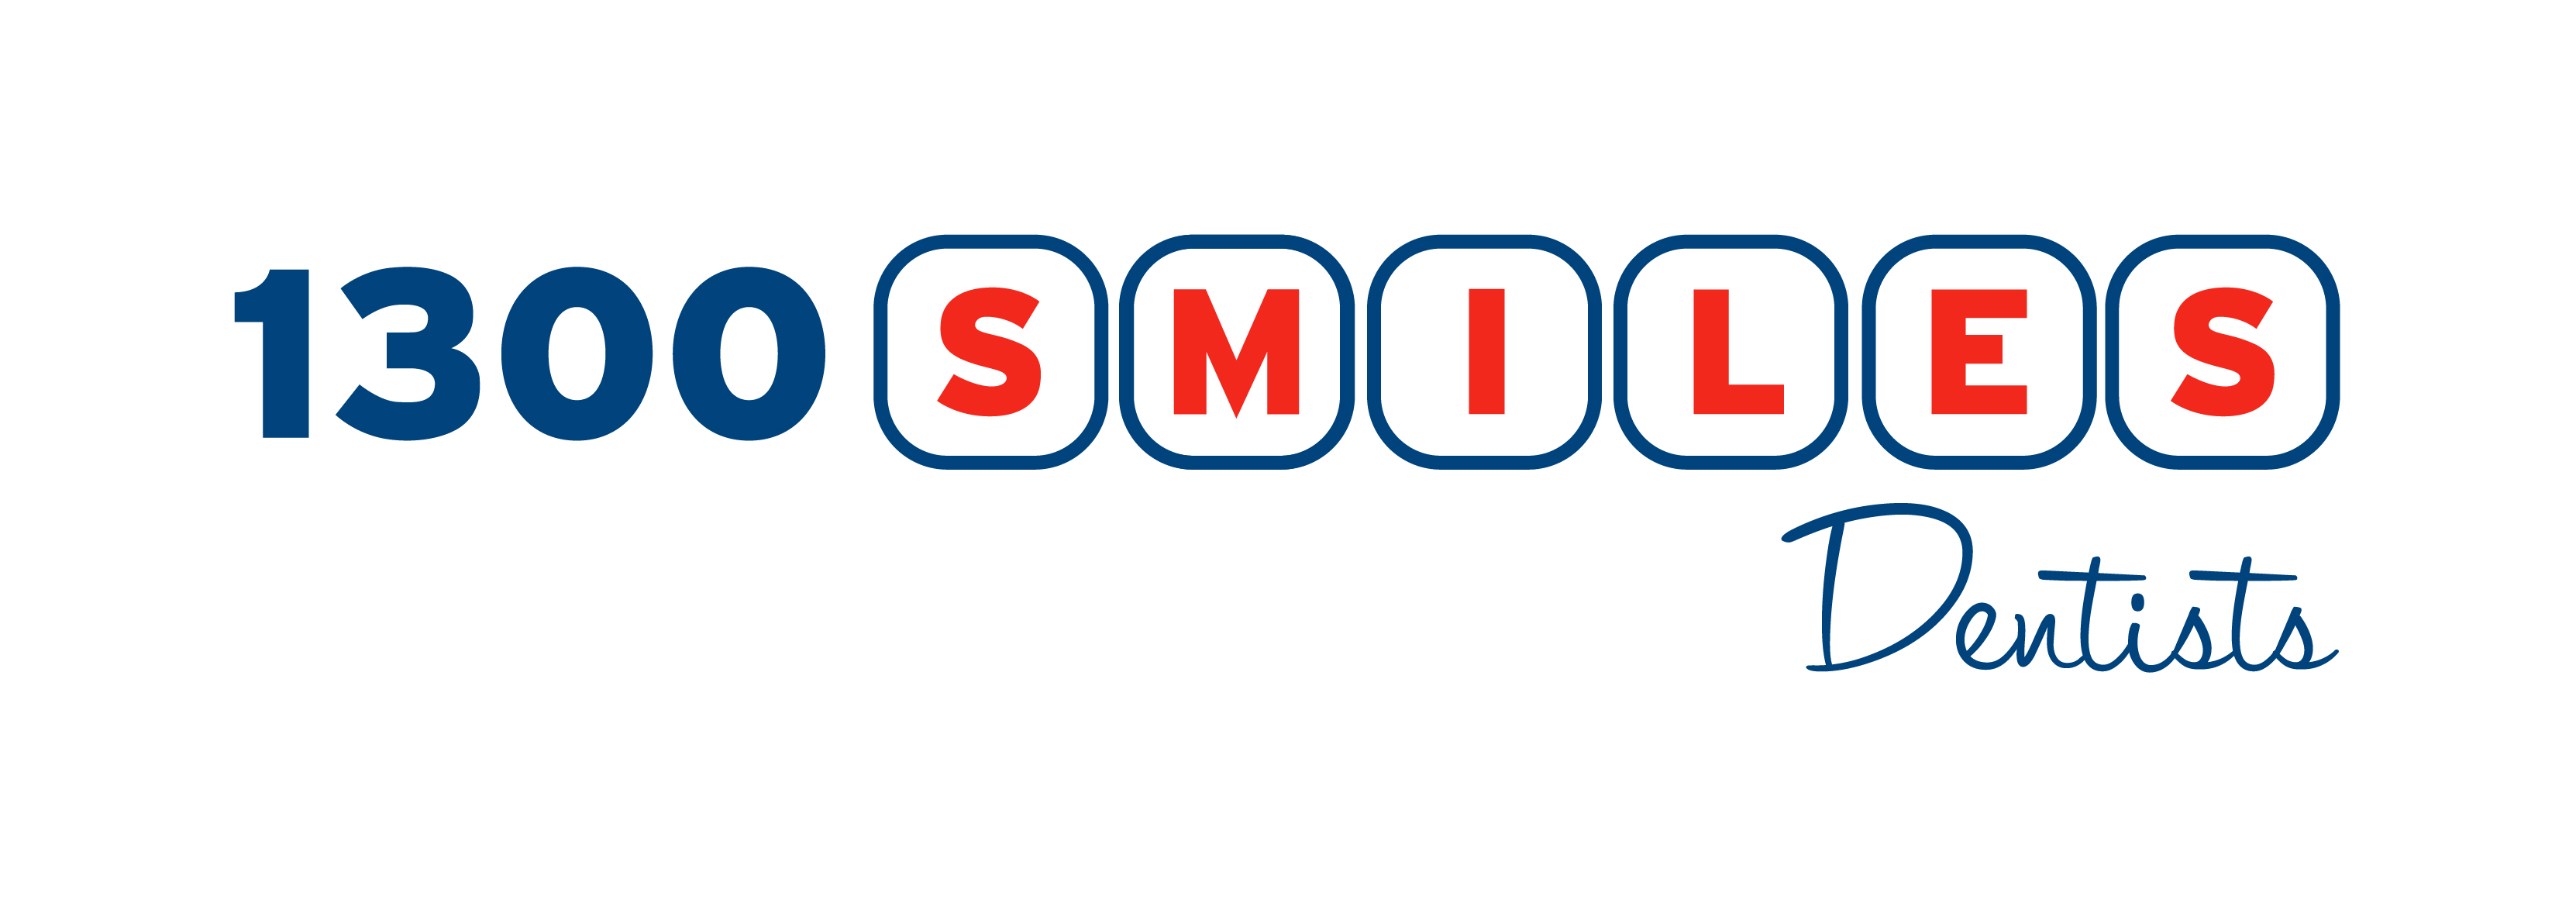 1300 Smiles Dentists